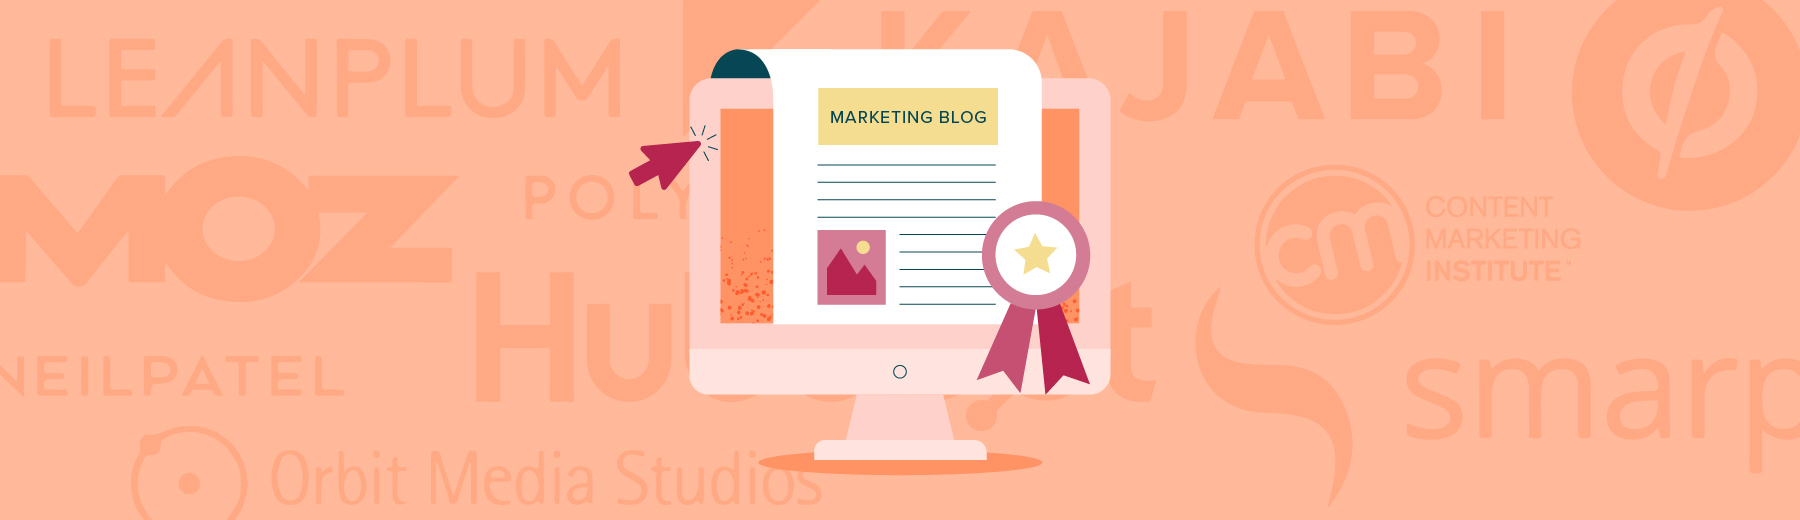 13 best marketing blogs to follow